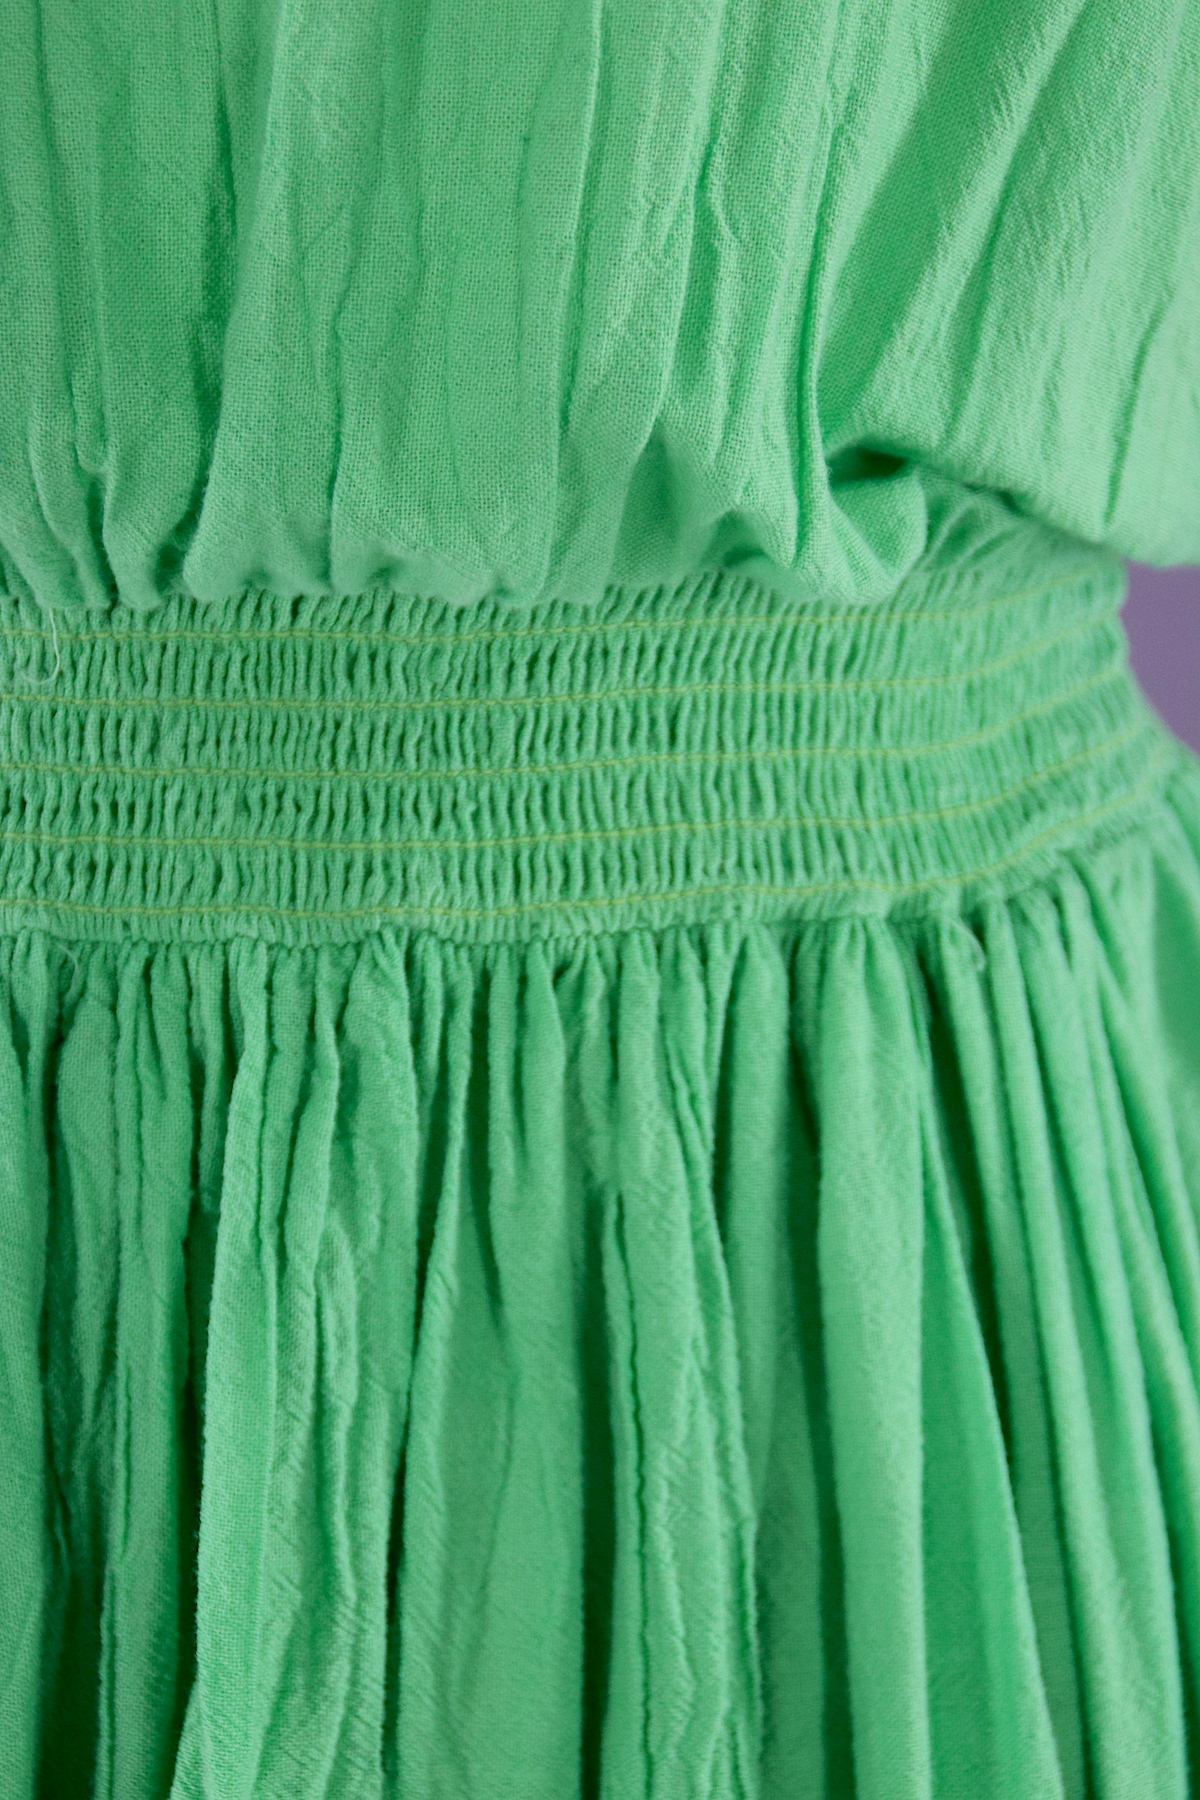 Vintage 1980s Cotton Gauze Dress / Bright Green Indian Cotton ...